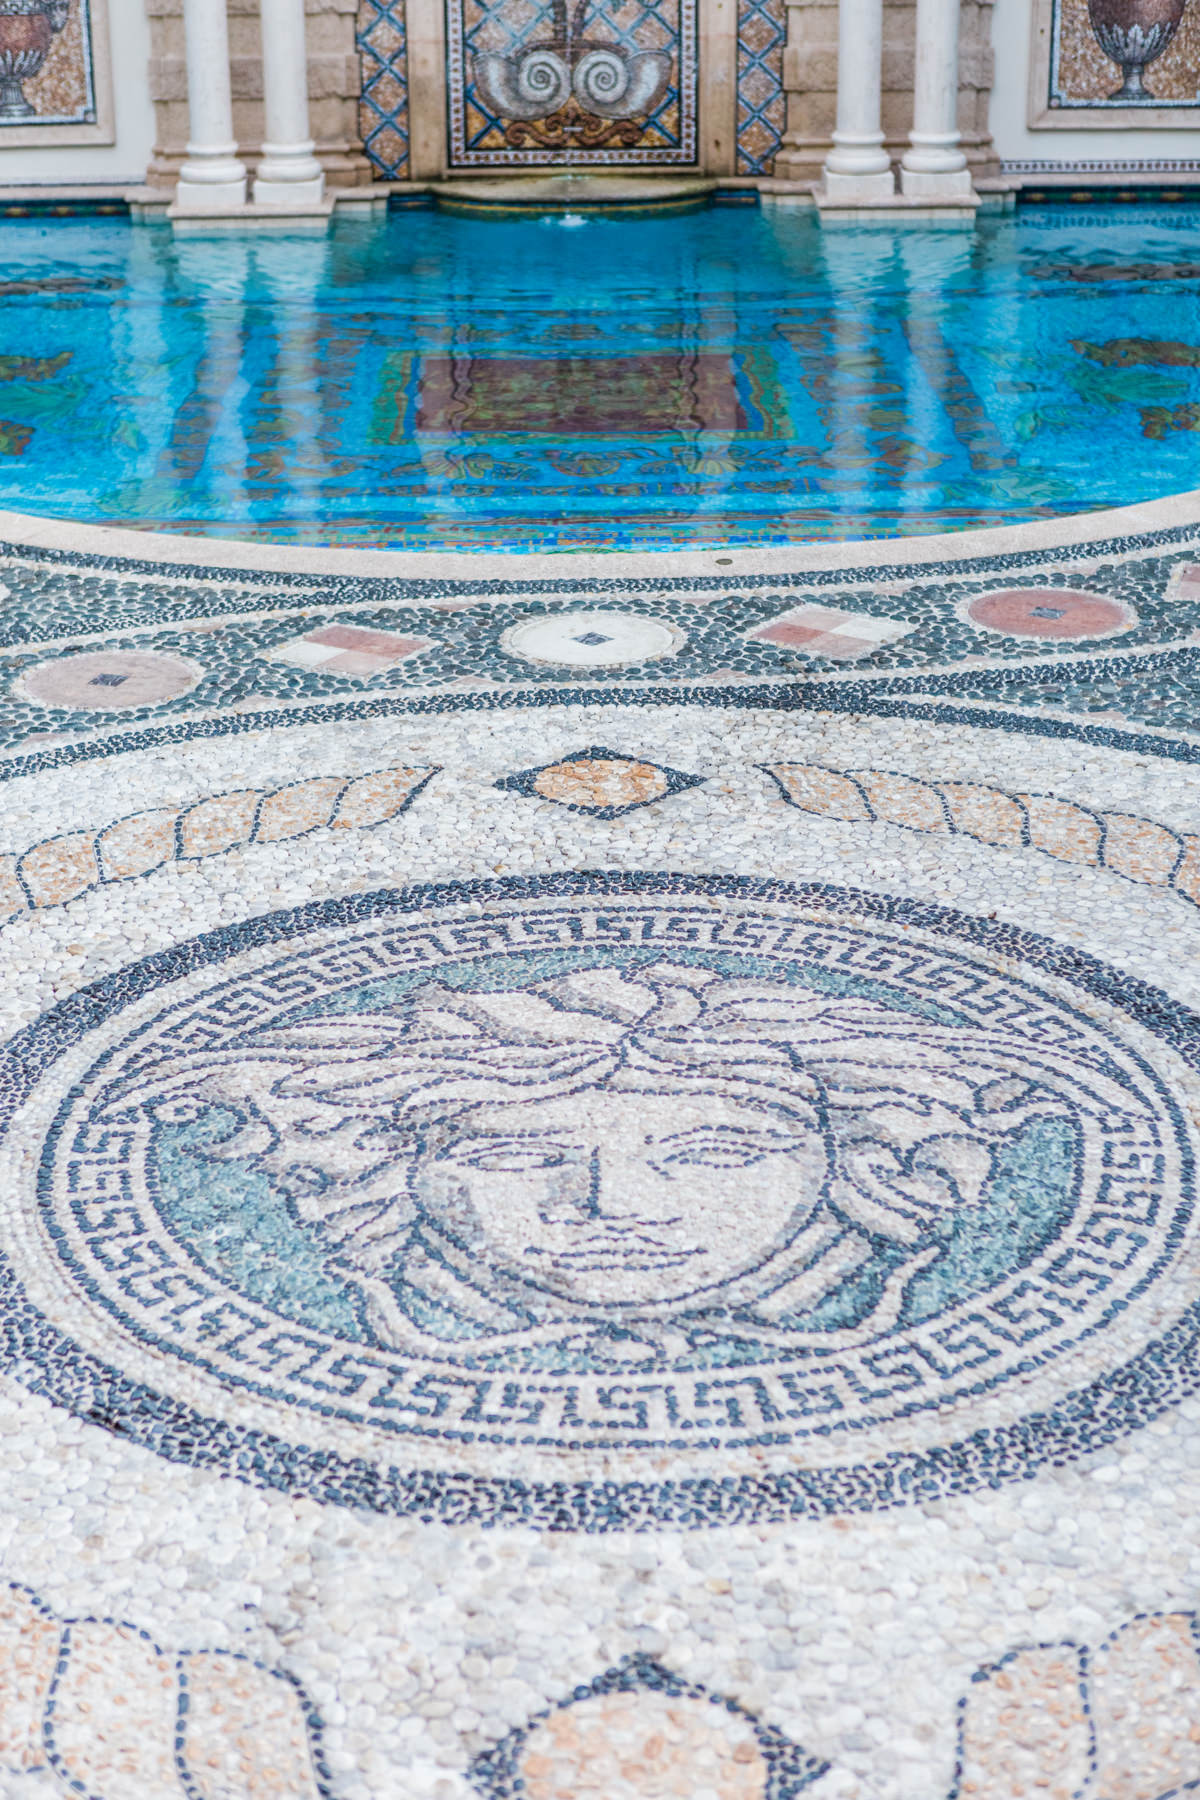 The Versace Mansion - Mosaic Art Showcase